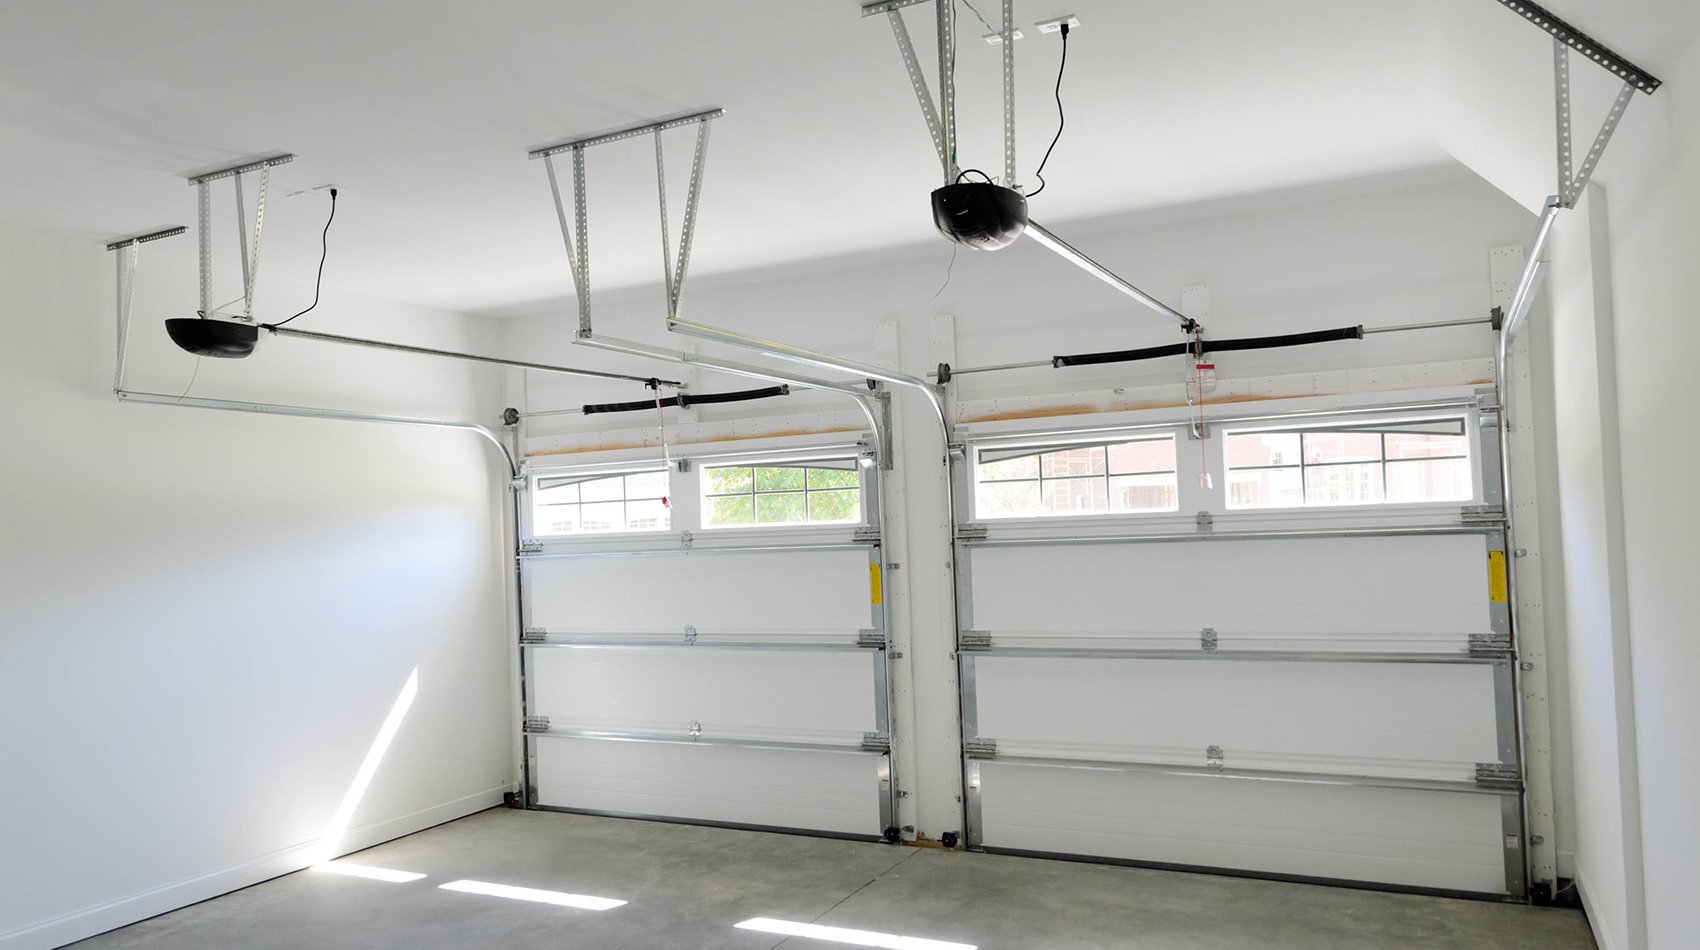 42 Popular Garage door light bulb problems for New Ideas